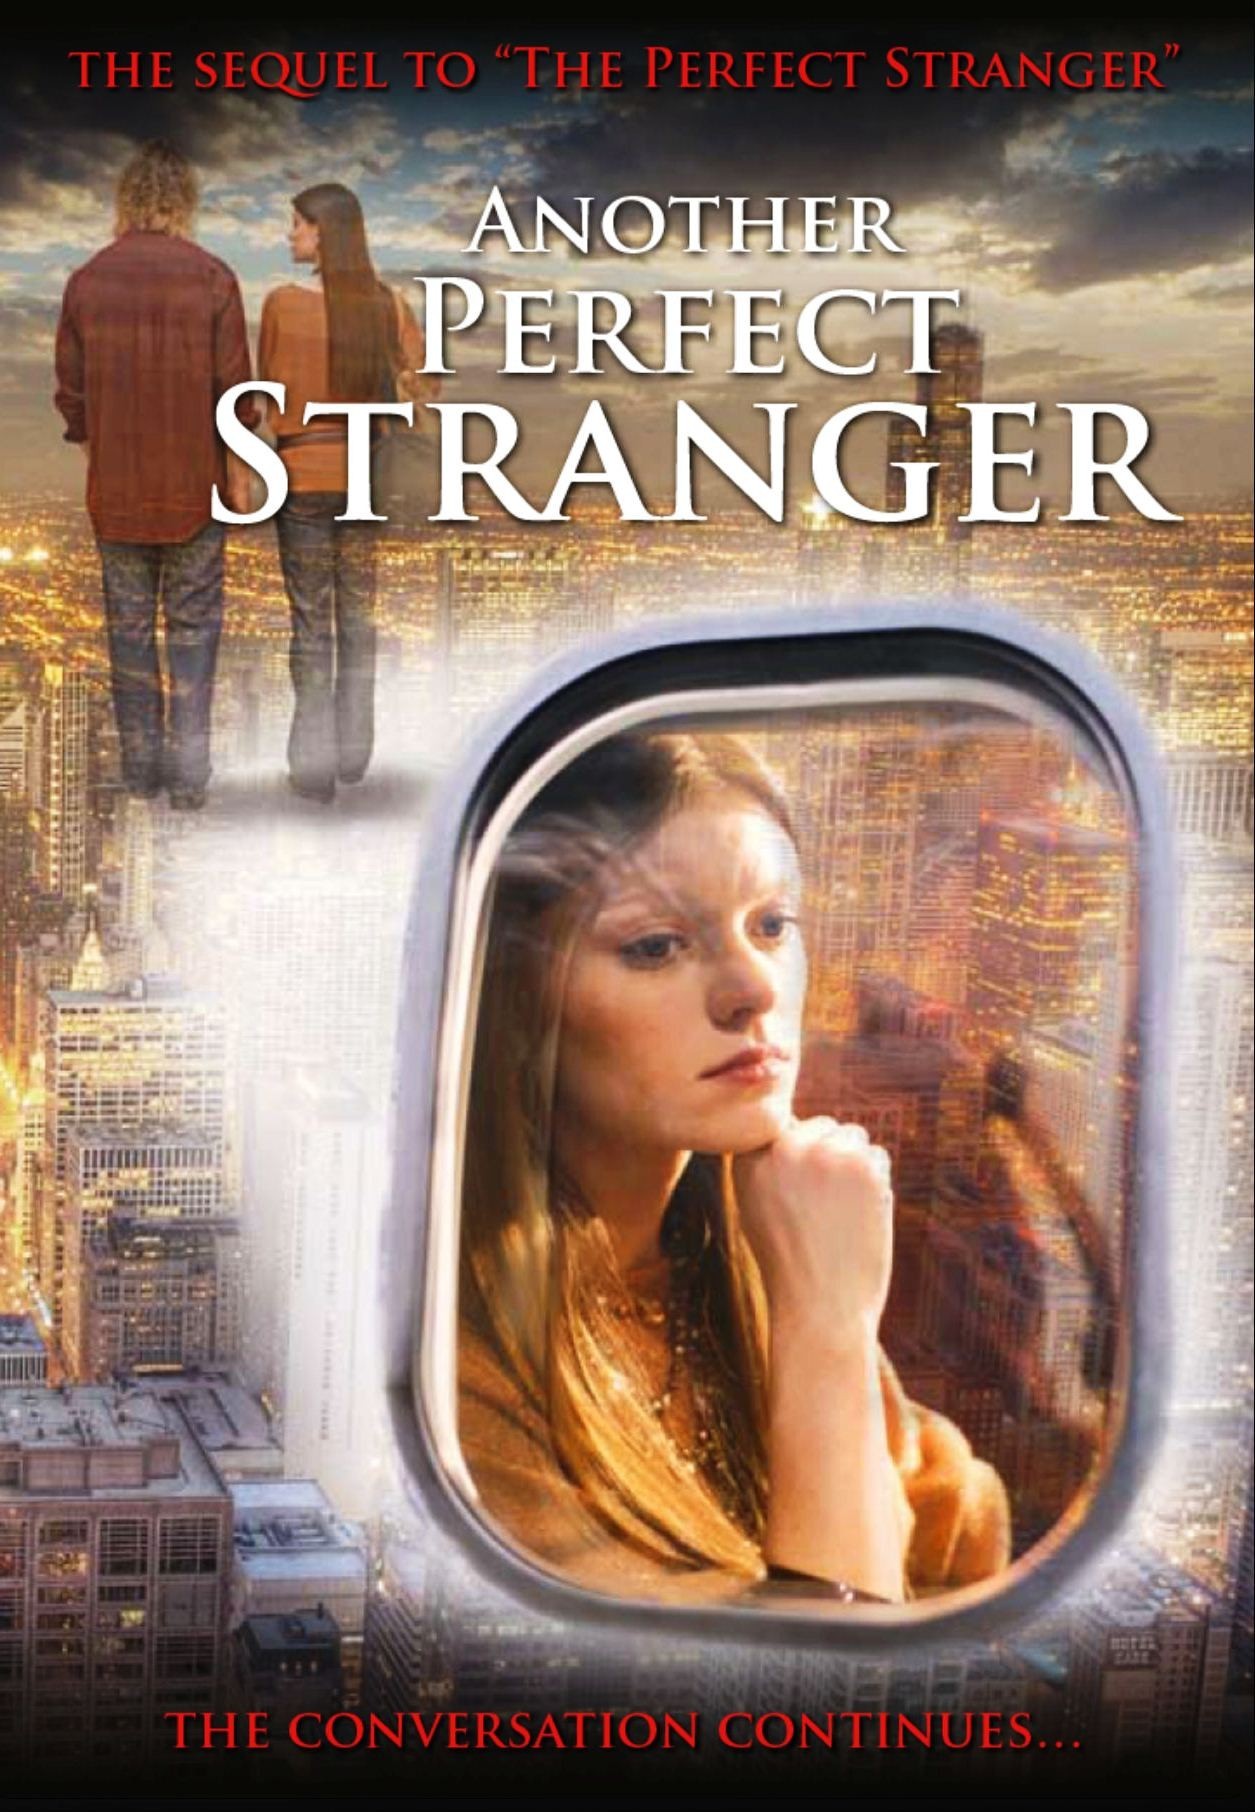 The Perfect Stranger (2005) Christian Movie